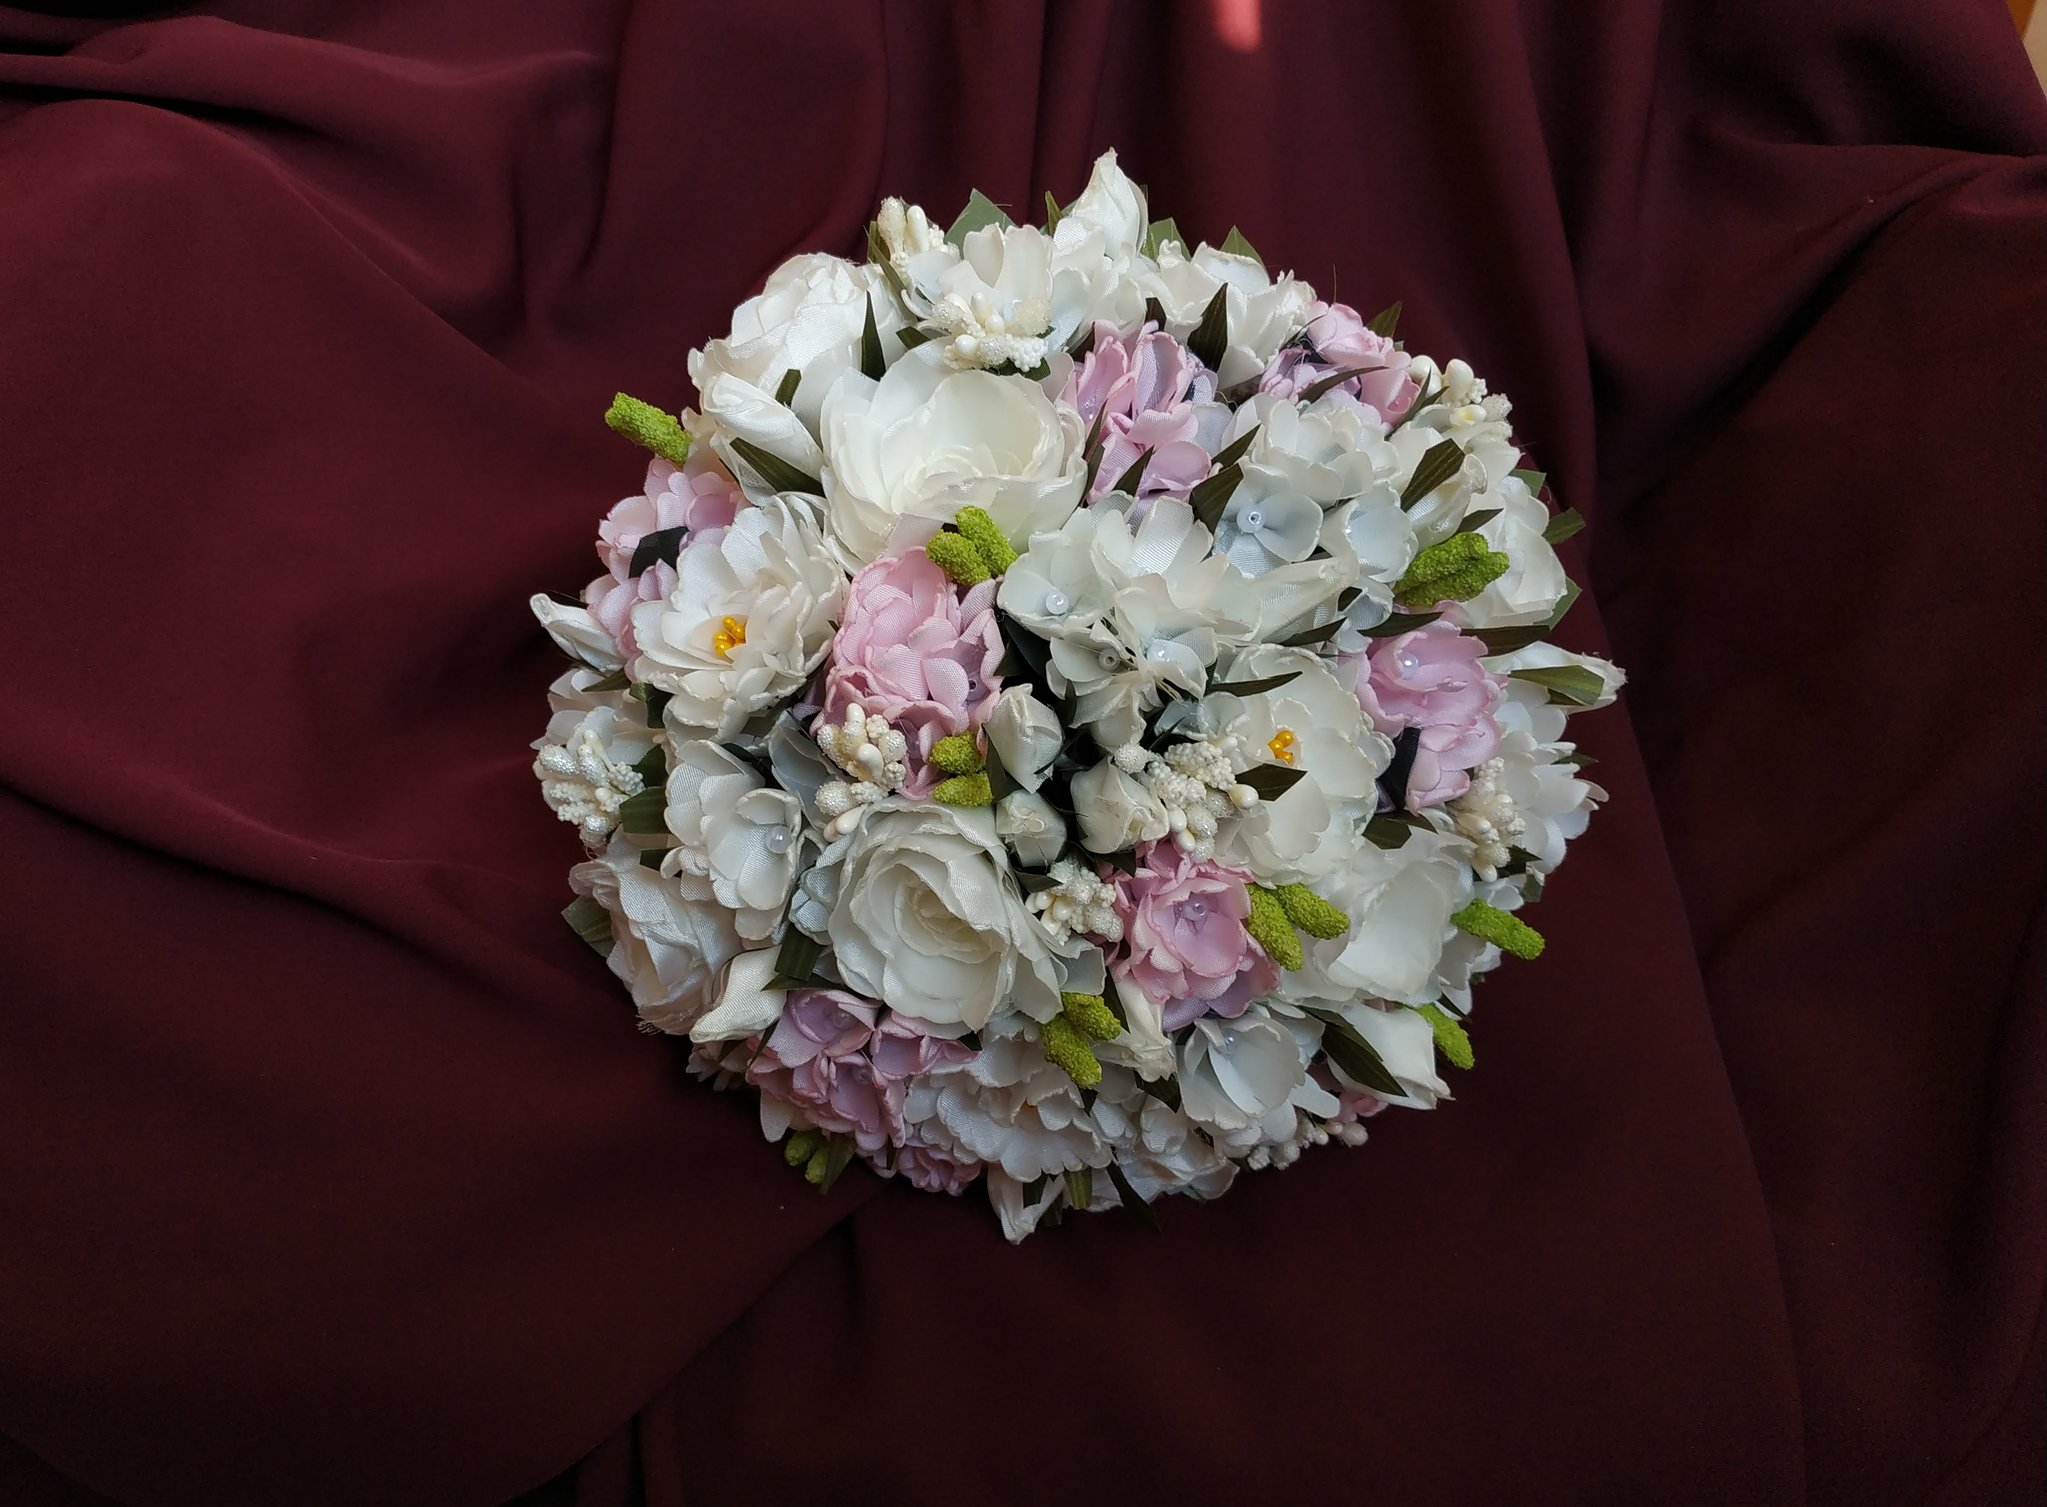 Handmade bridal bouquet of peonies